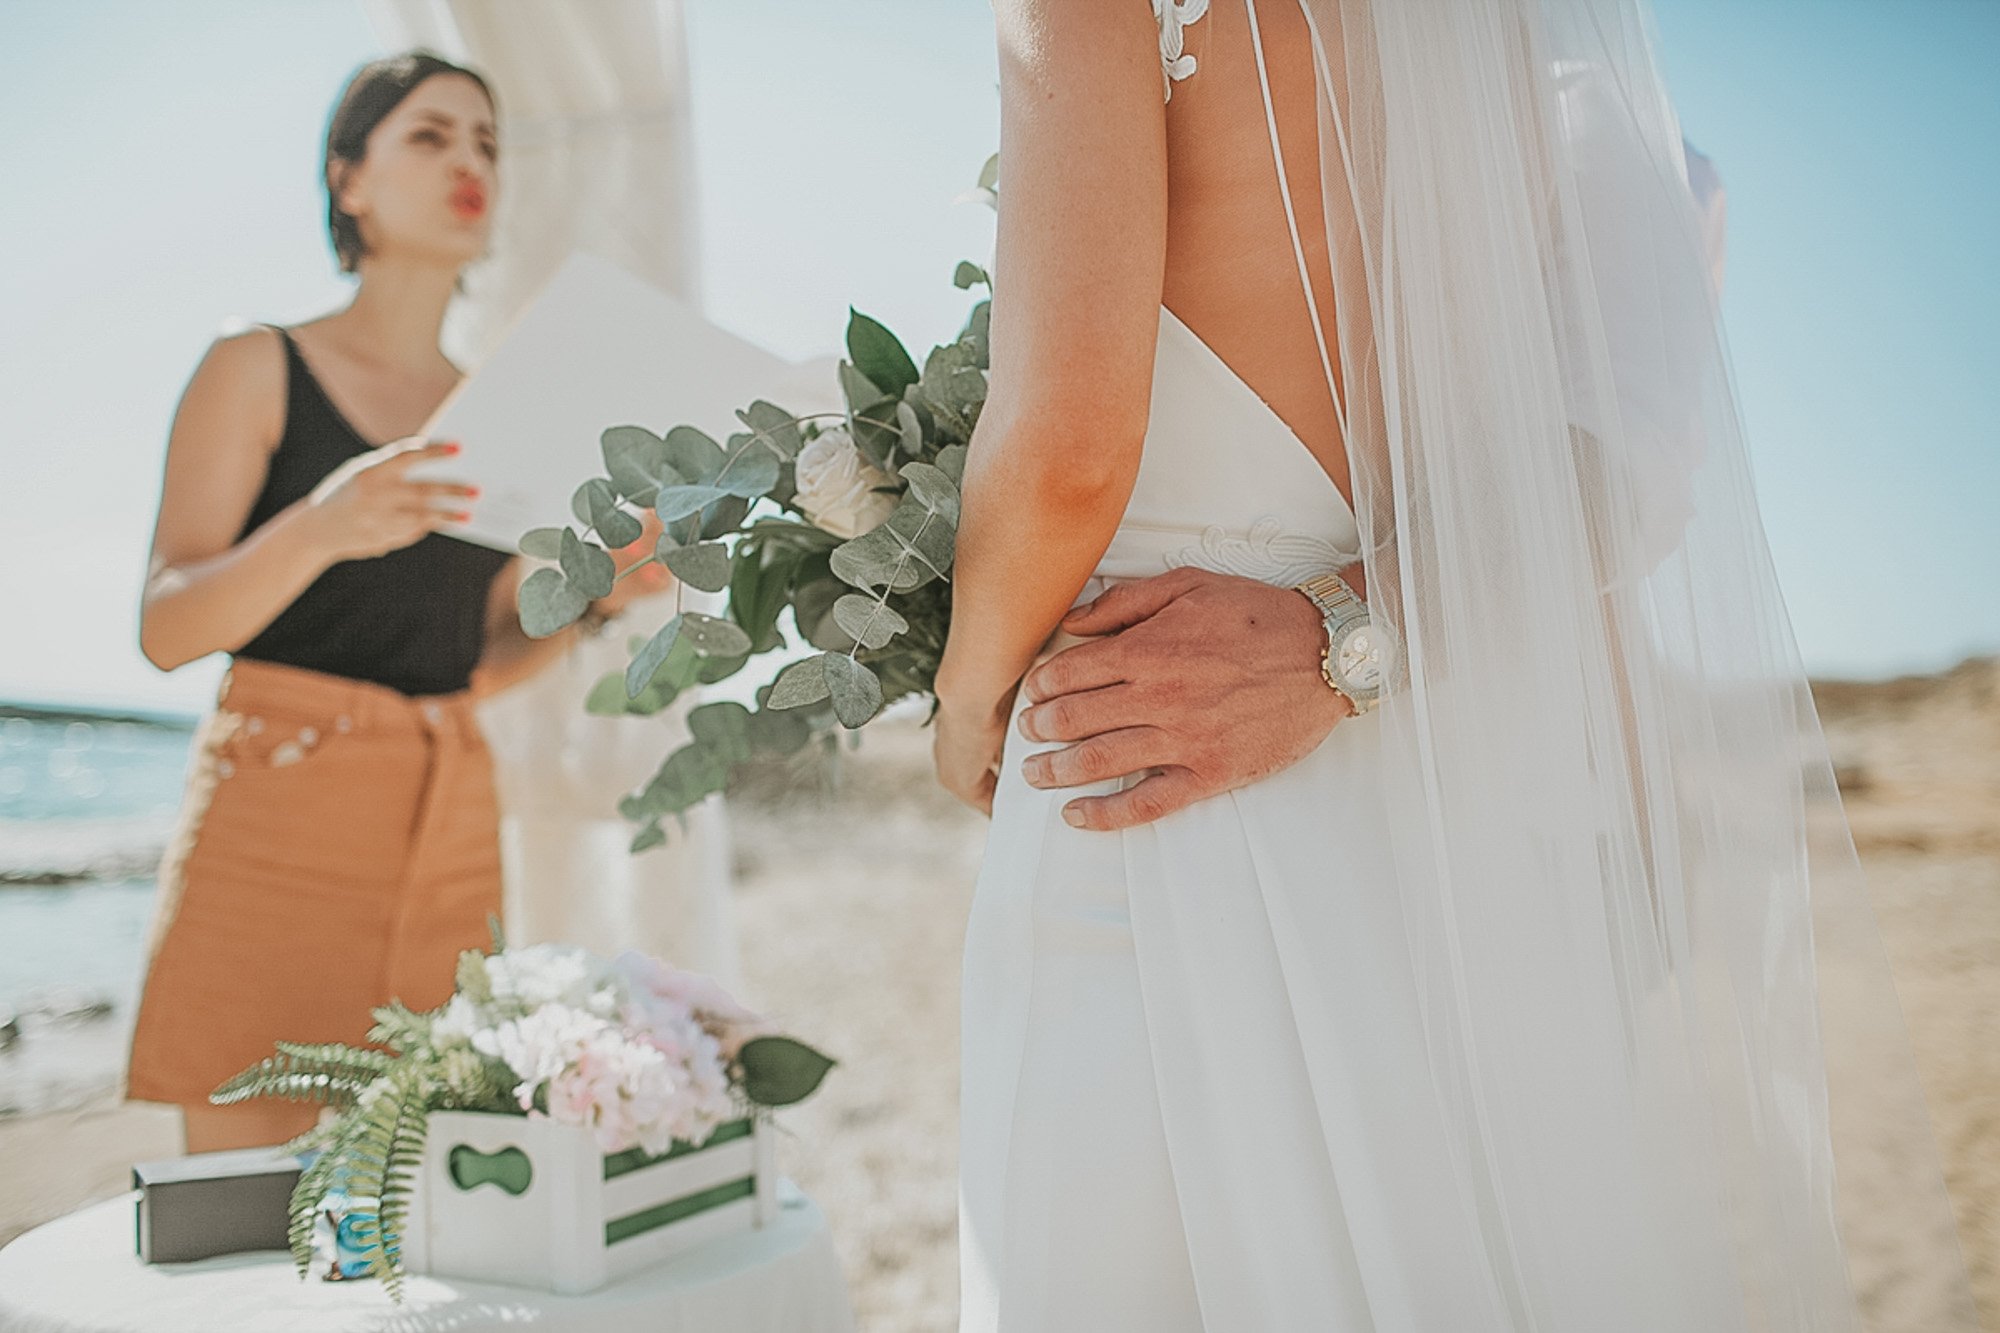 getting married at St George's Beach, Peyia, Paphos, Cyprus.